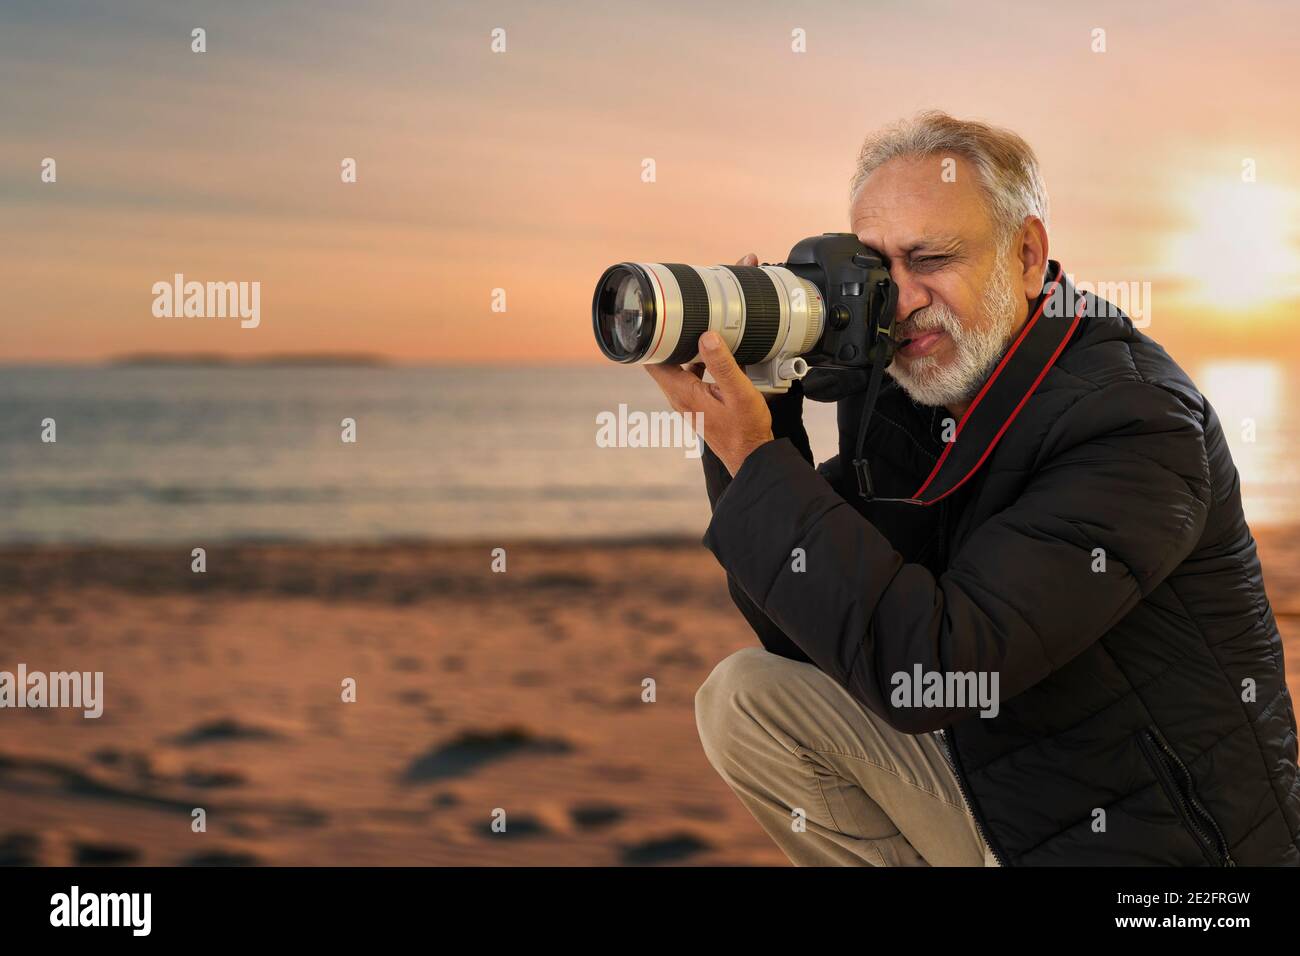 PORTRAIT OF A SENIOR ADULT MAN CLICKING PHOTOGRAPHS ON A BEACH Stock Photo